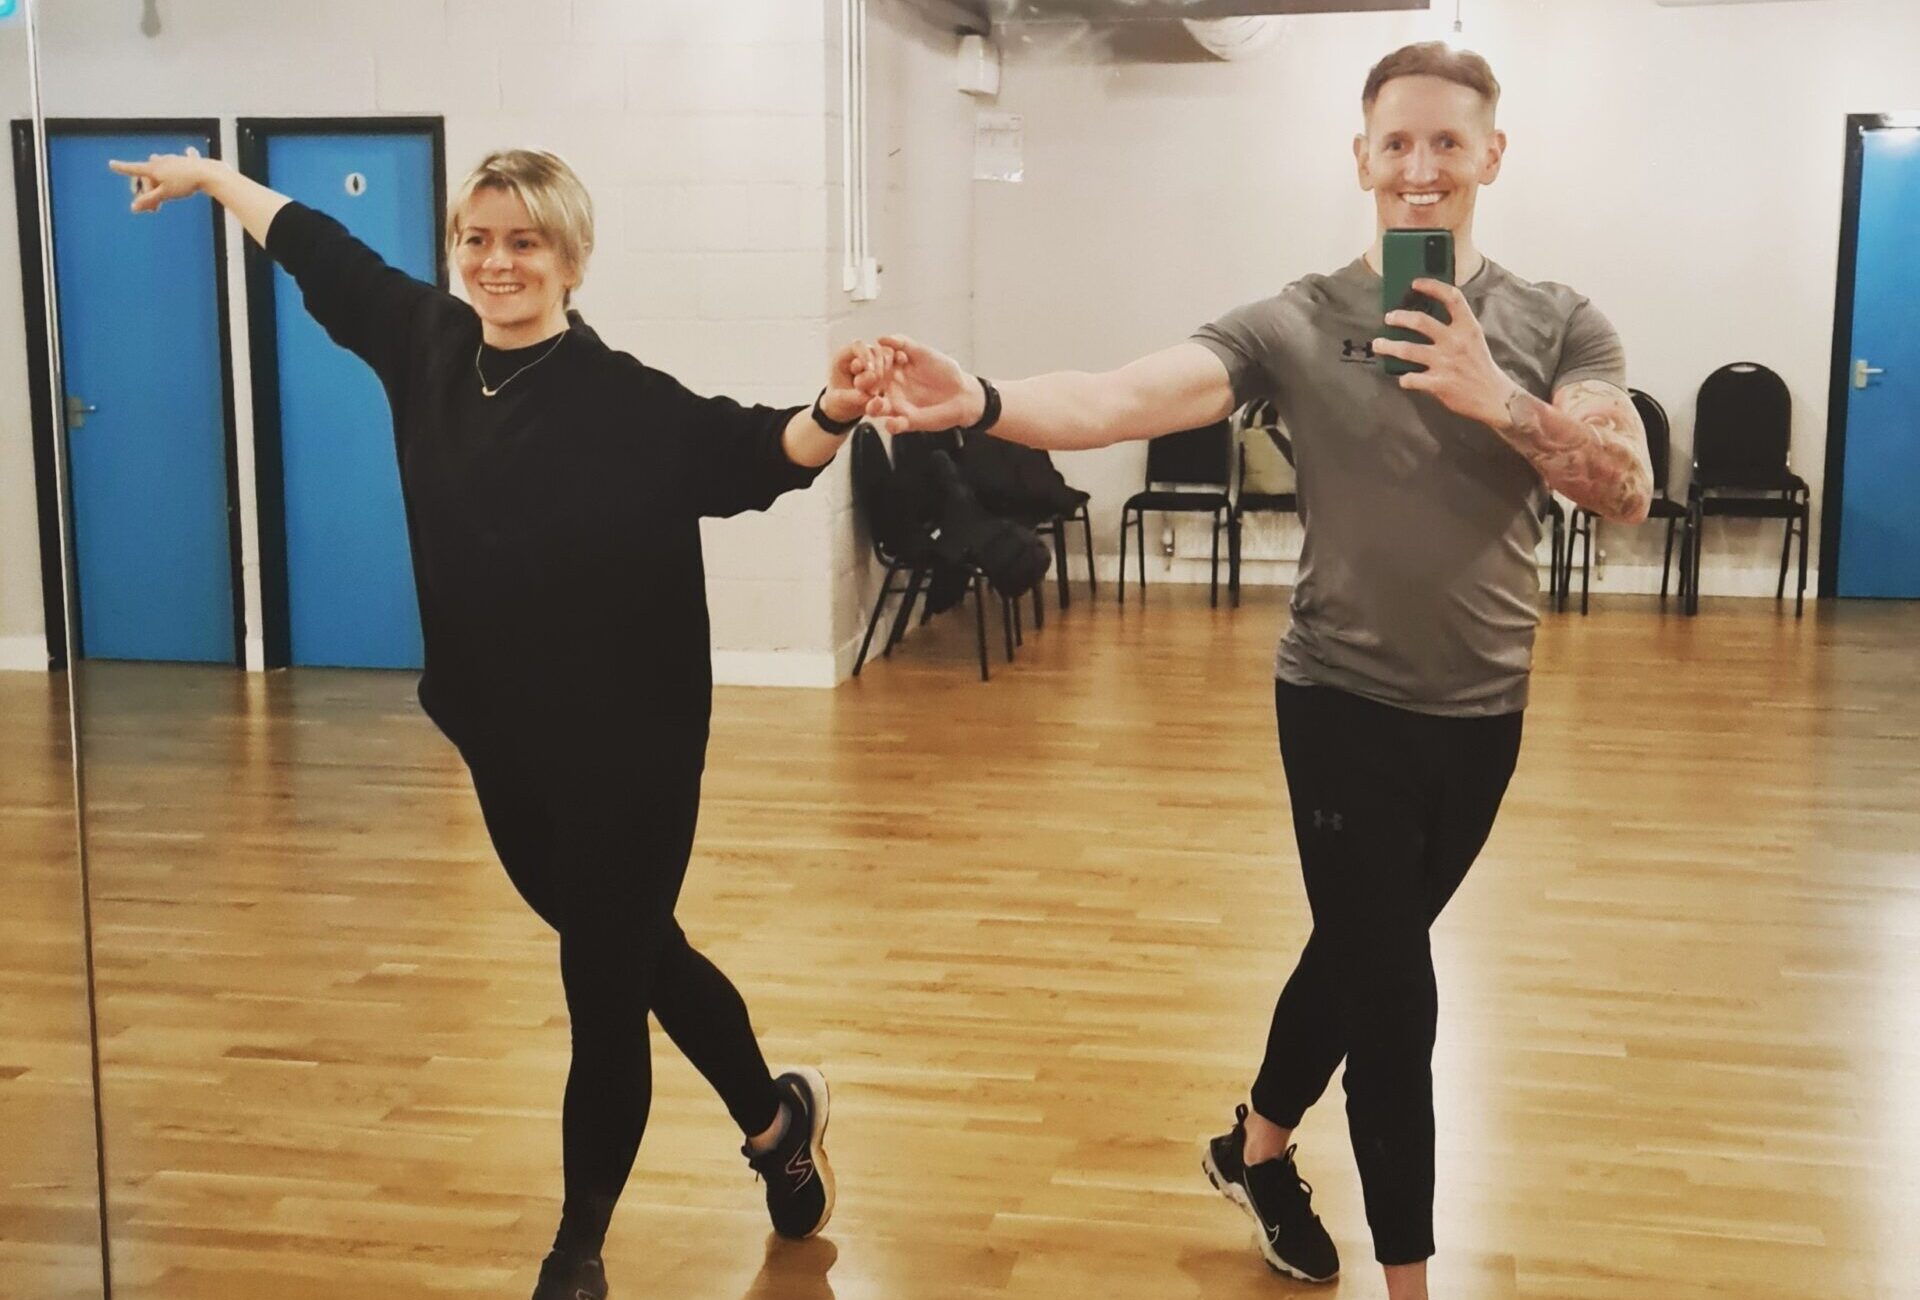 Two people dancing in a dance studio